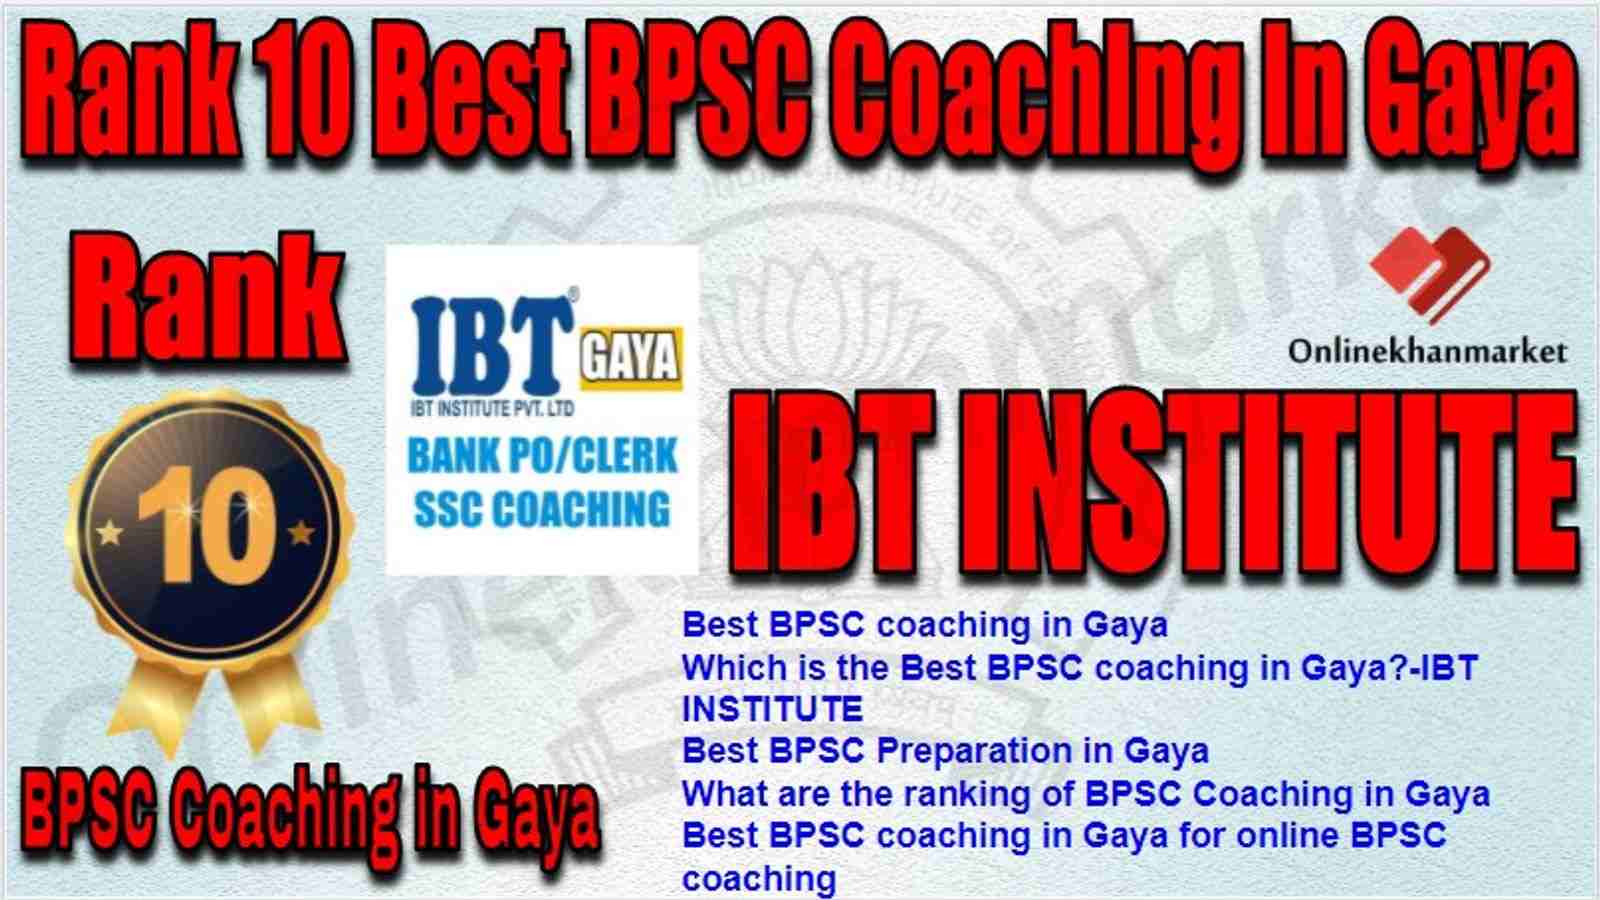 Rank 10 Best BPSC Coaching in gaya